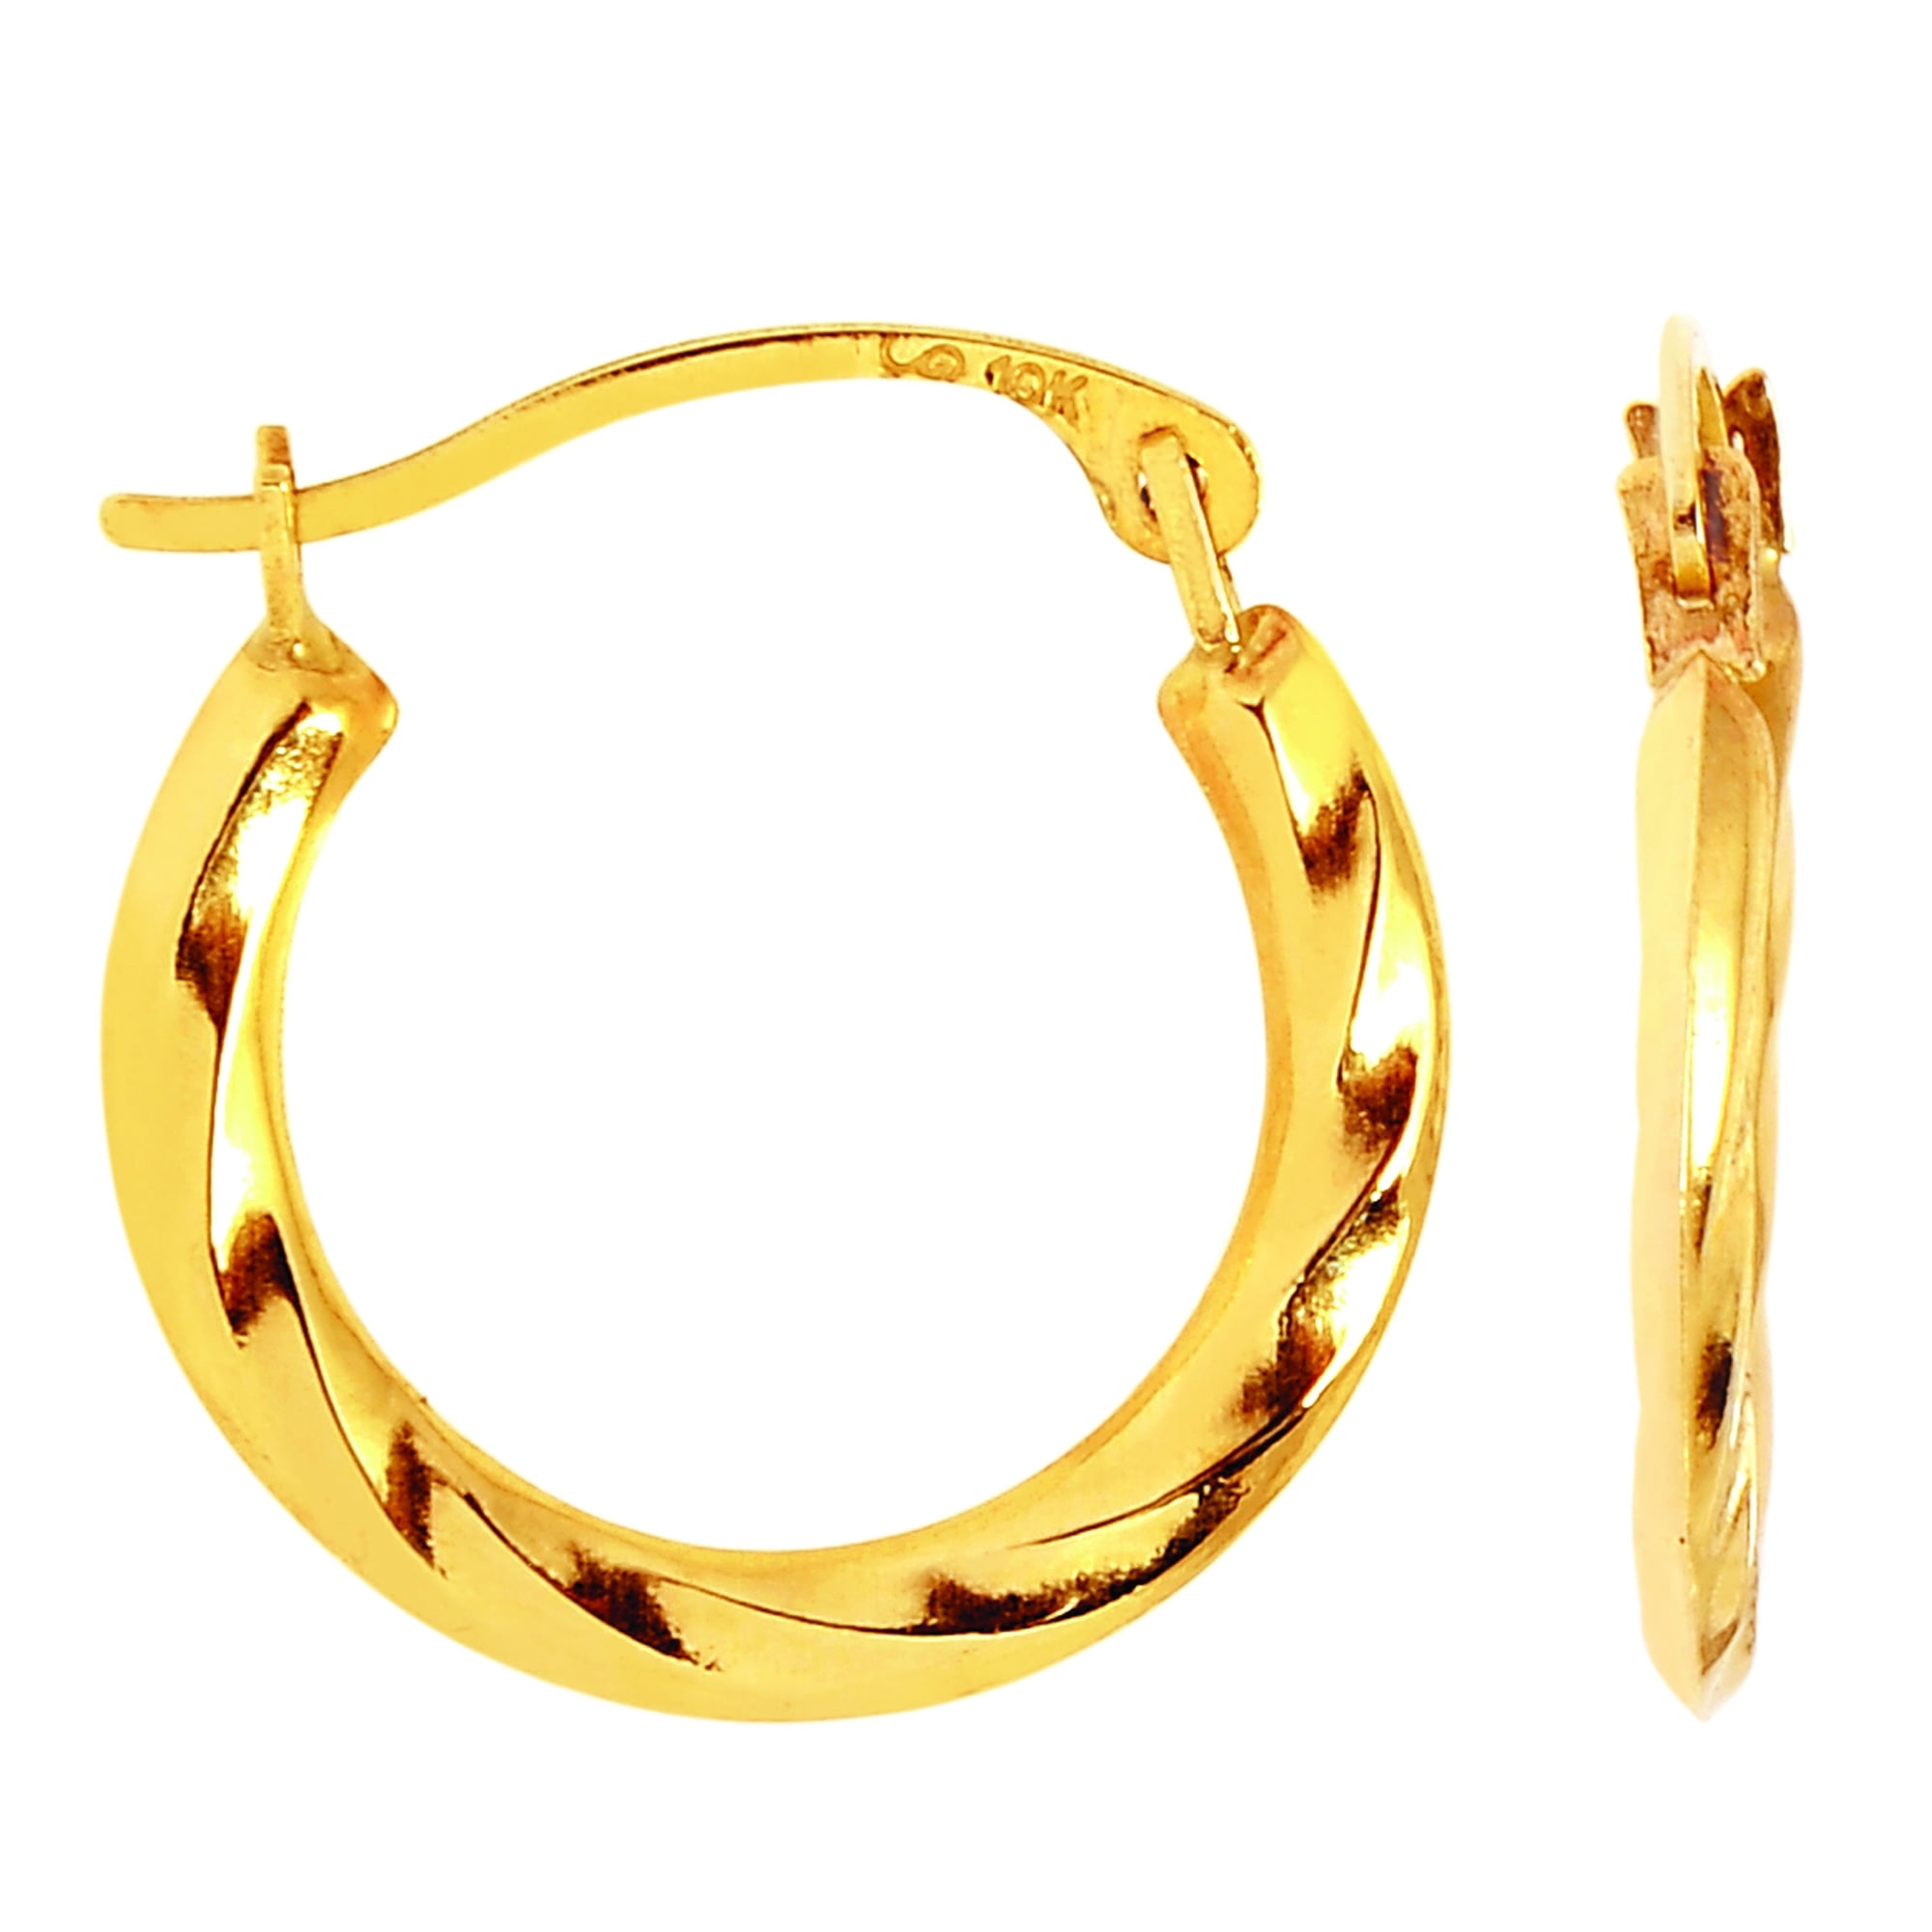 10k Yellow Gold Twisted Hoop Earrings, Diameter 15mm | Walmart Canada